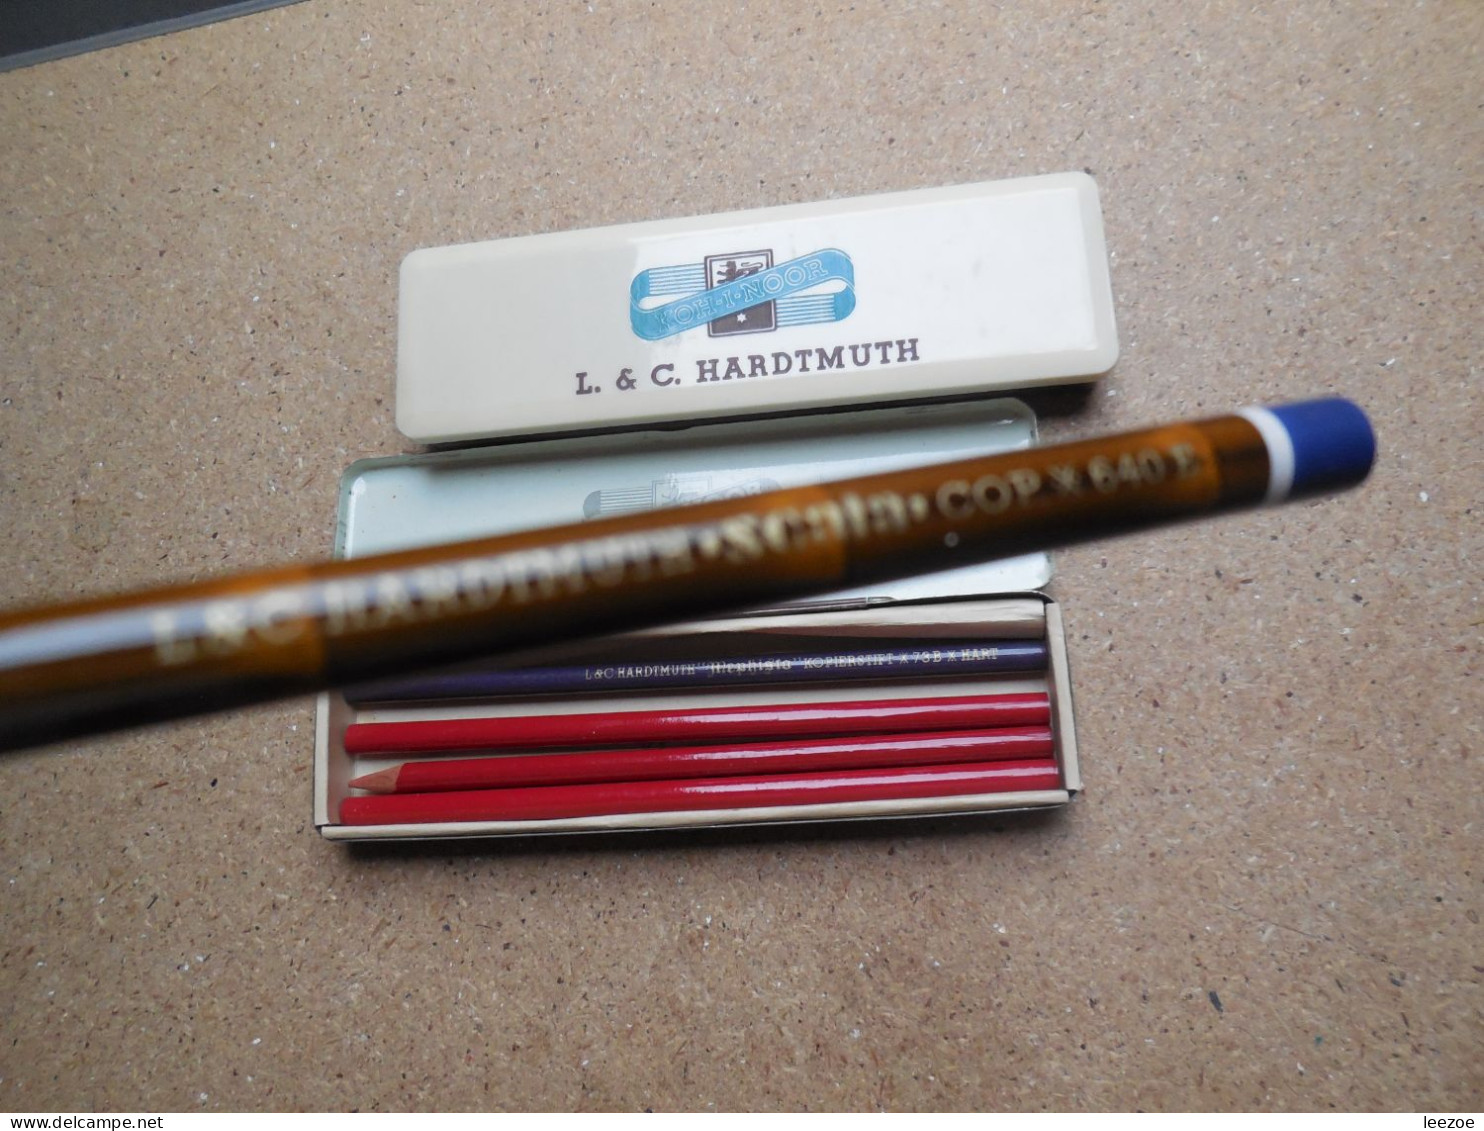 Boite de crayons KOH-I-NOOR L. & C. HARDTMUTH, 1 en plastique et 1 en métal avec différents crayons.........N5